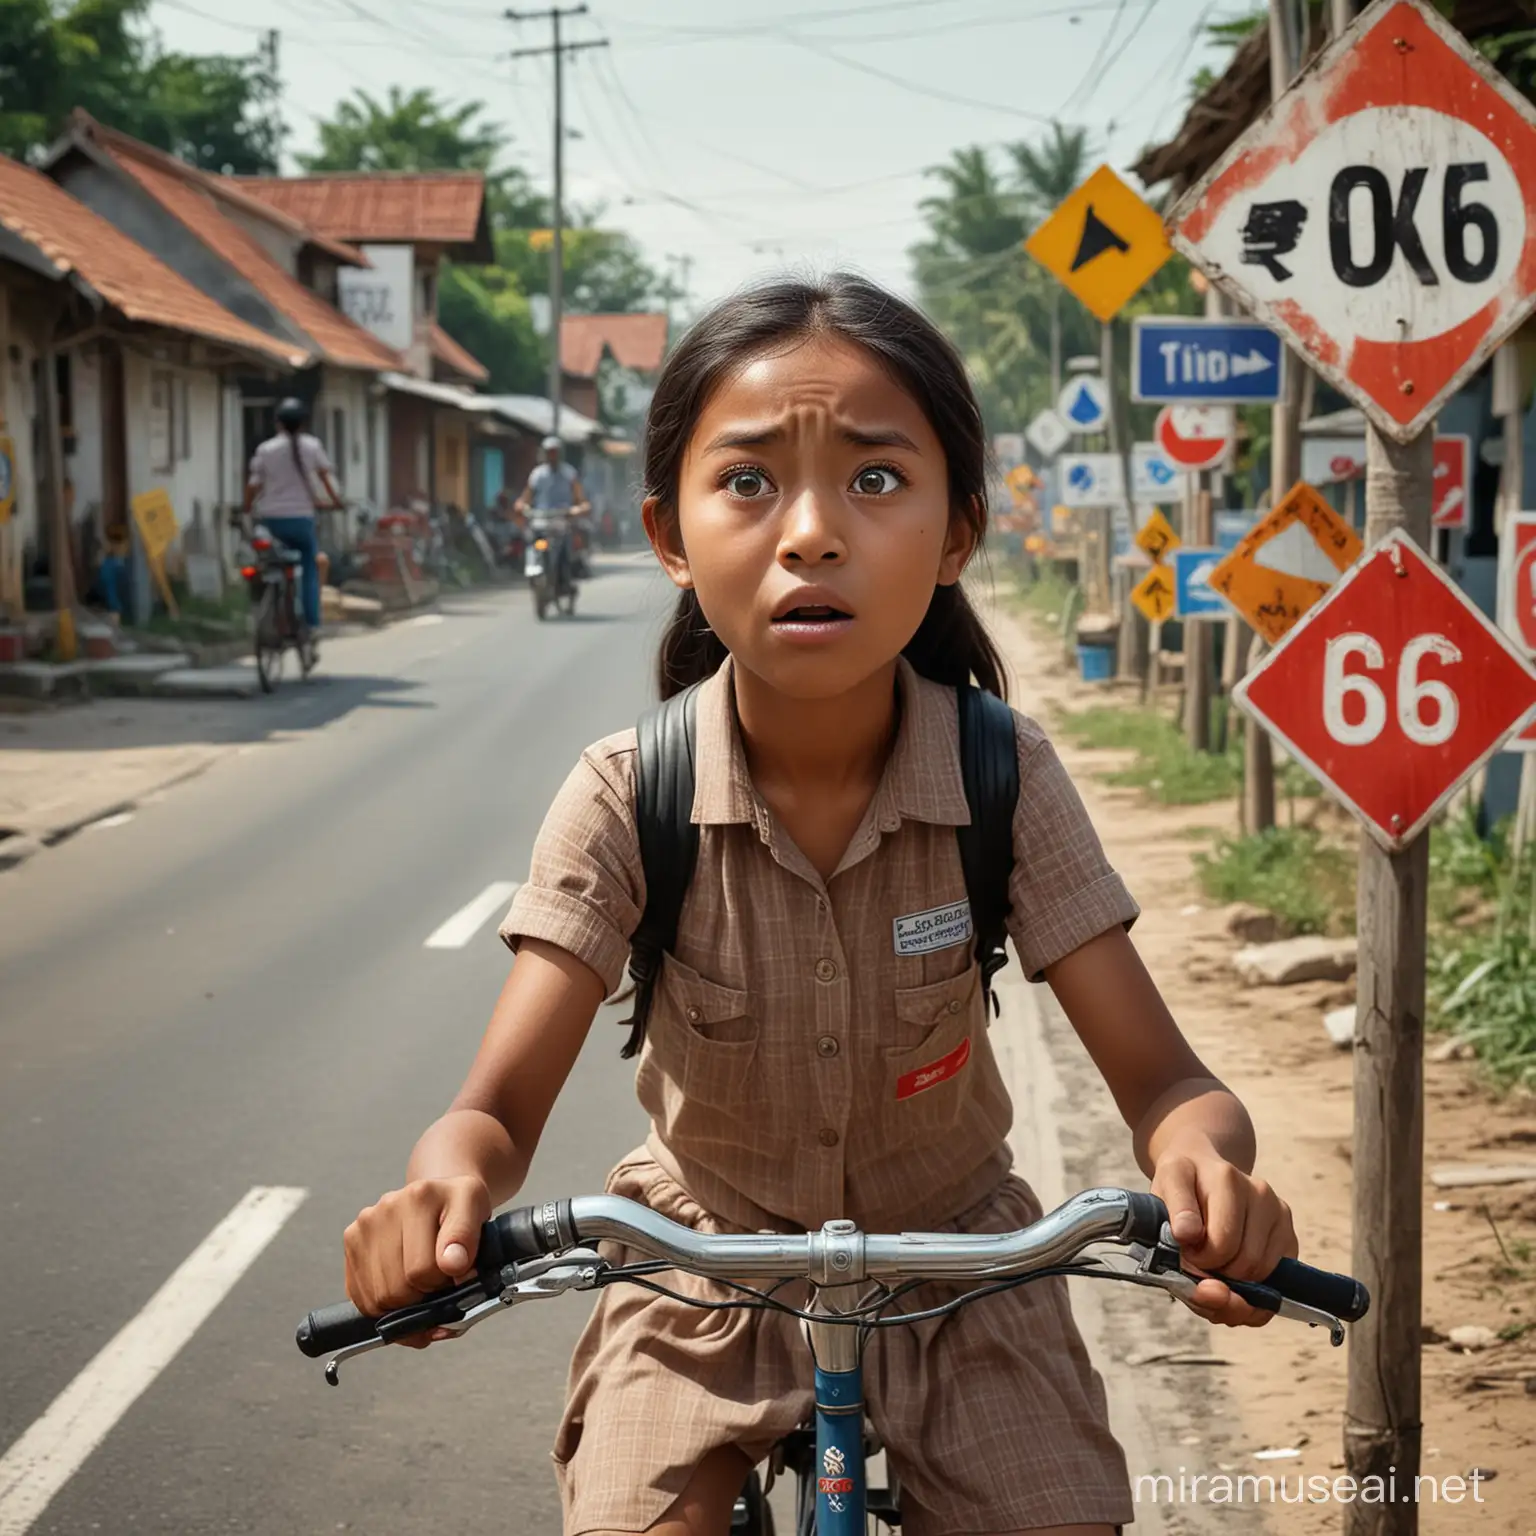 Seorang pengendara sepeda ontel (gadis Indonesia usia 12 tahun) putus asa di sebuah jalan desa kecil dengan banyak Rambu lalu lintas.  Pengendara punya wajah ketakutan dan matanya besar. Dia melihat ke samping pada tanda-tanda. hari yang cerah. Mahakarya, fotorealistik, hyperdetailed, hyperrealisme, 10k,